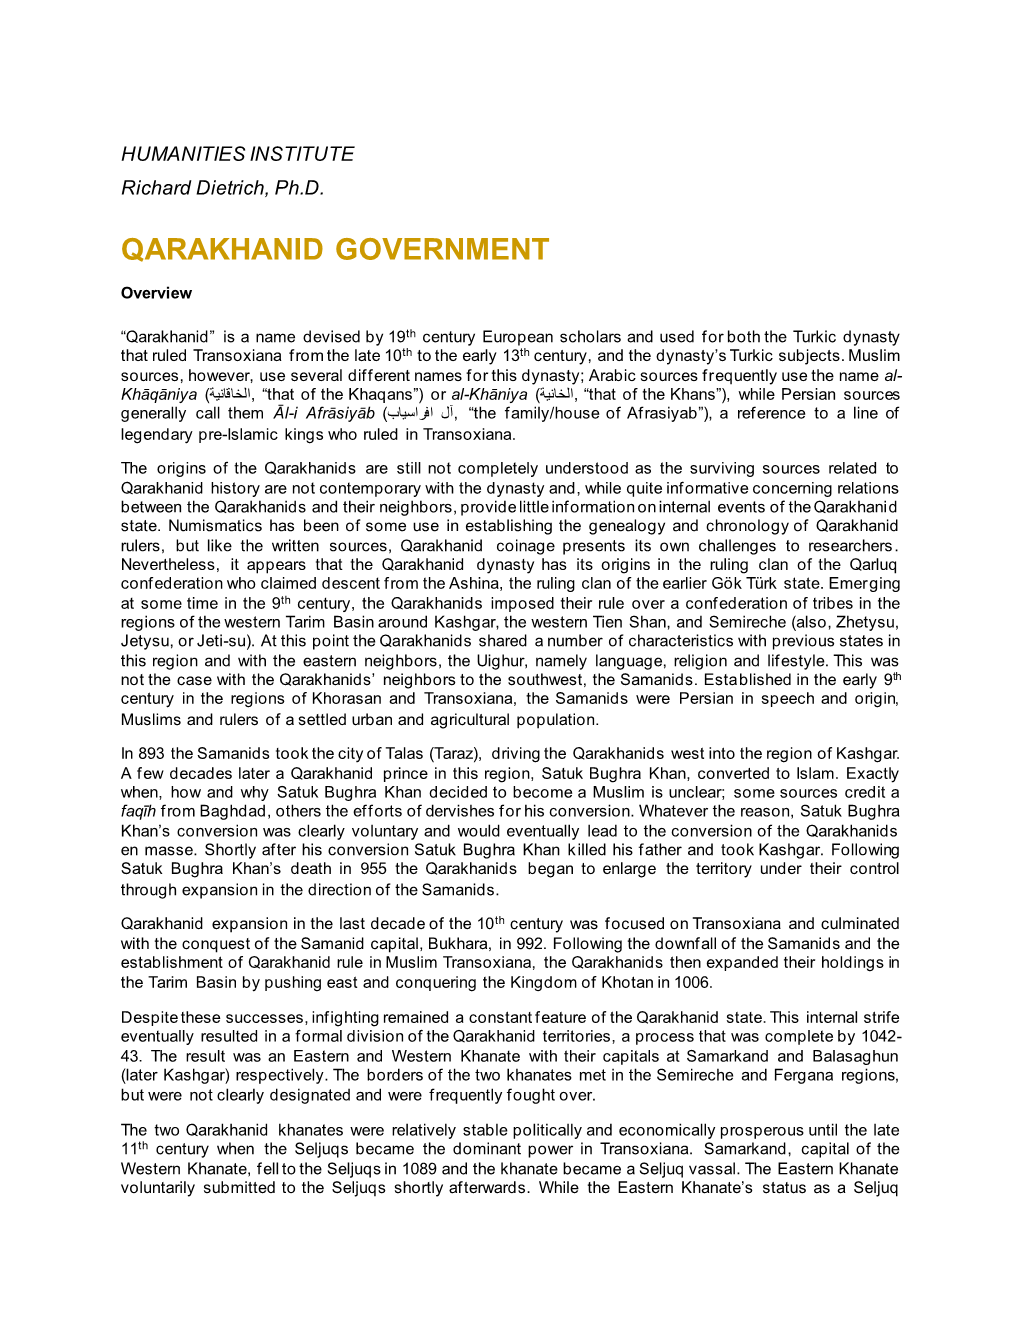 Qarakhanid Government